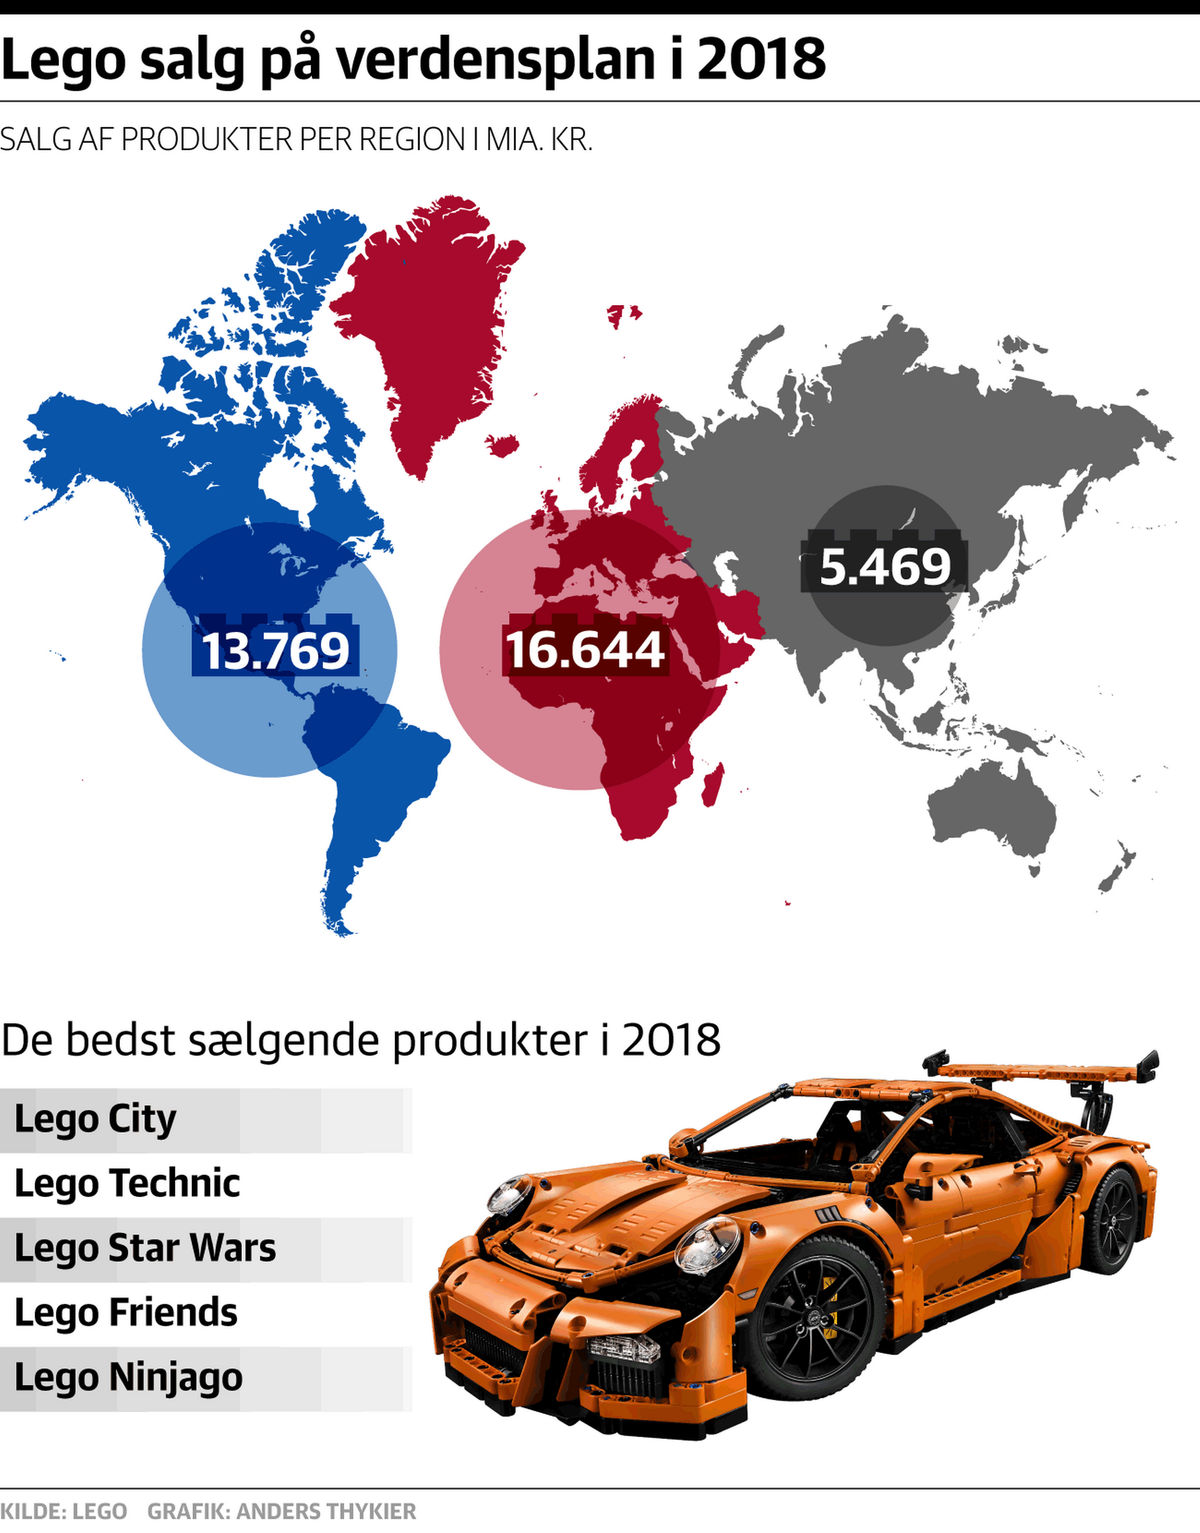 Lego i kampform: Lander milliardoverskud og varsler aggressiv strategi